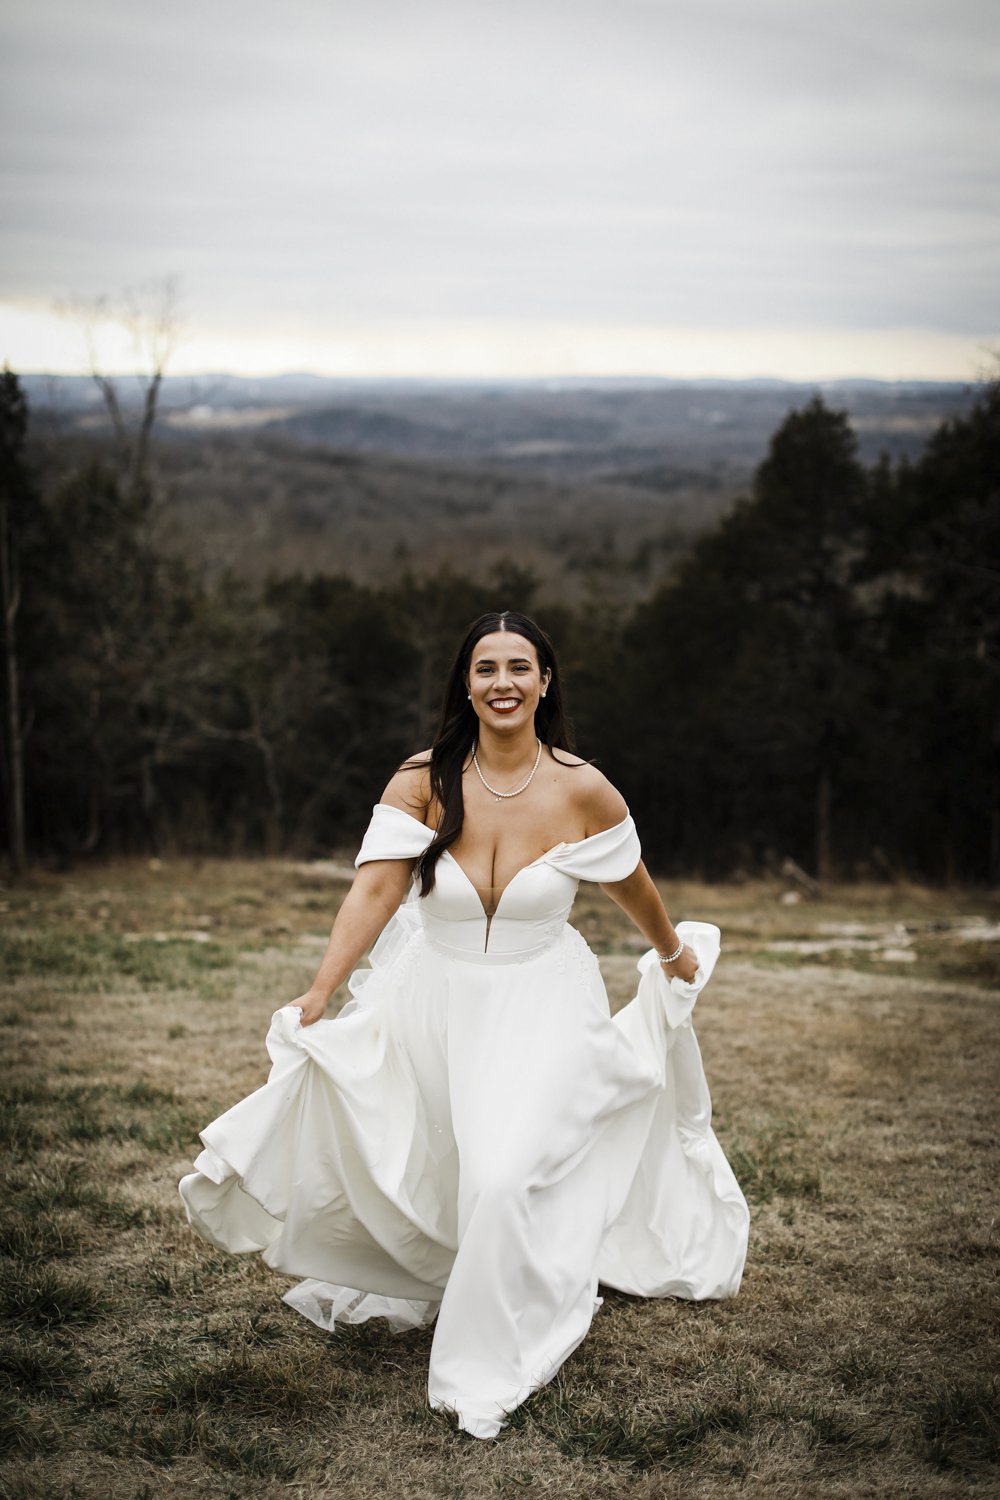 WEDDING PHOTOGRAPHER JOPLIN MO